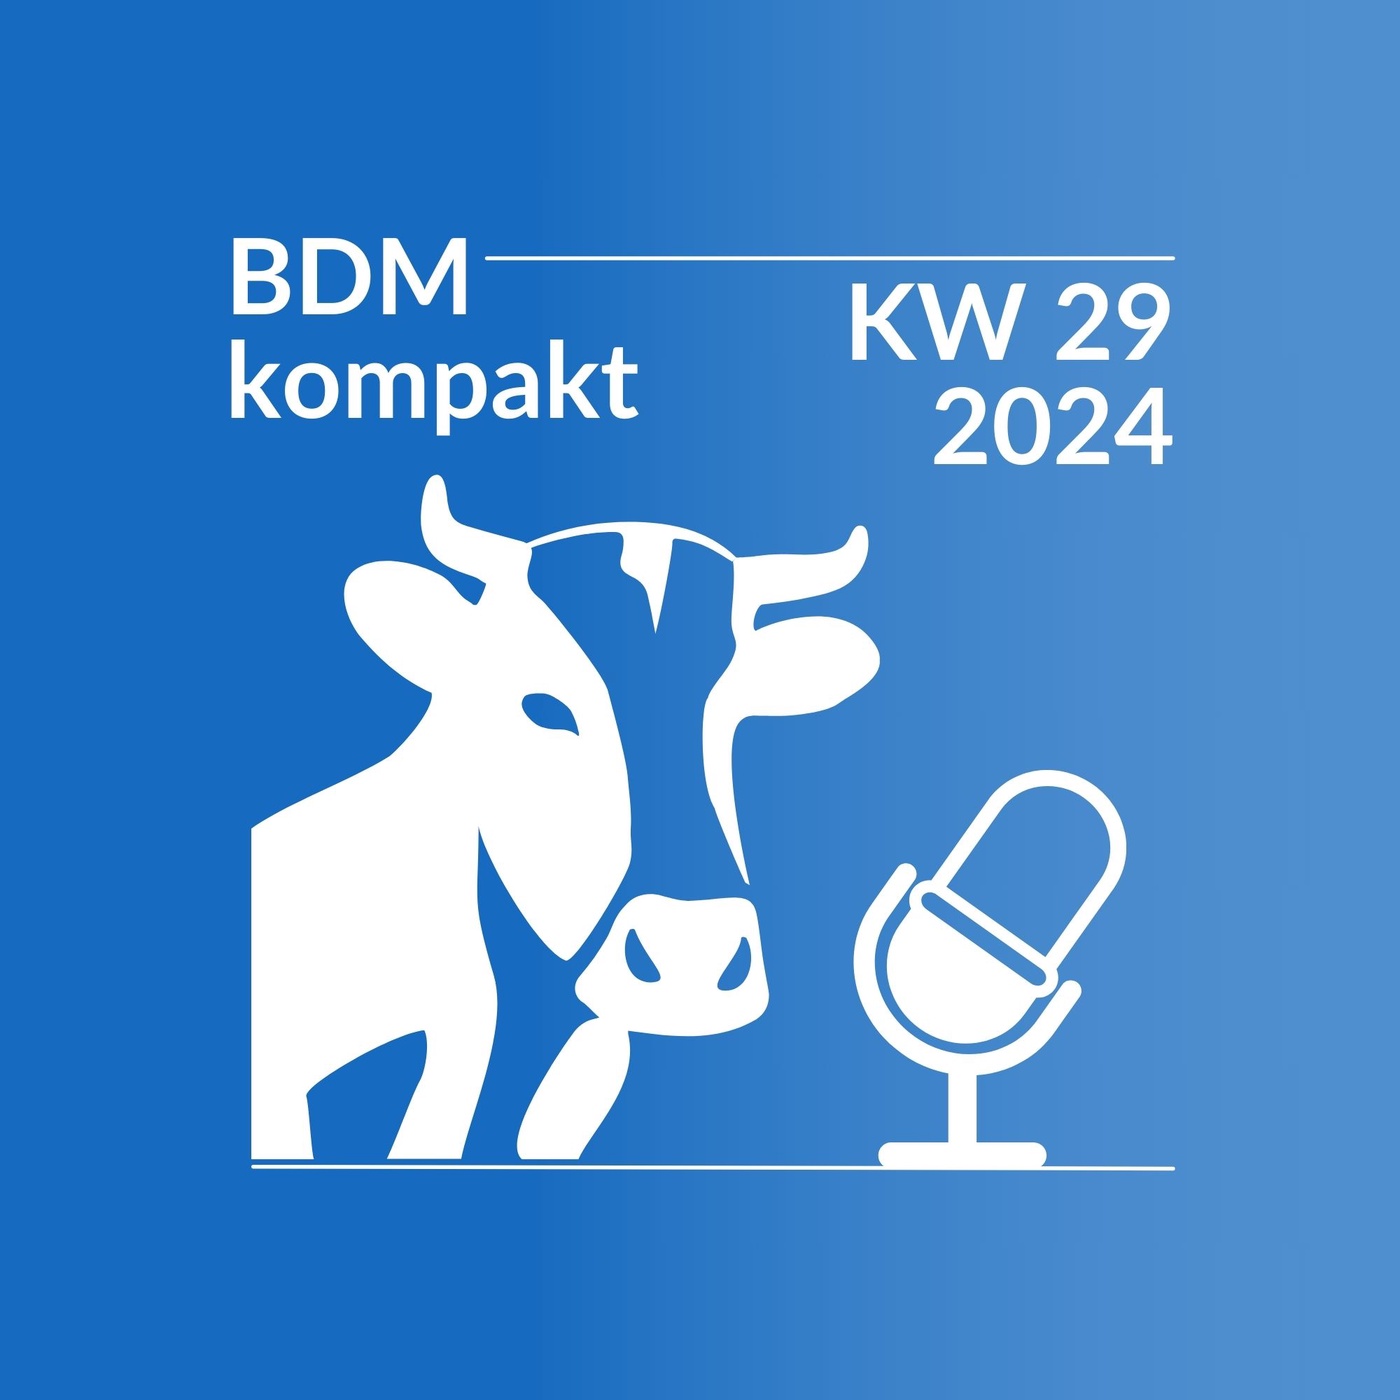 BDM kompakt KW 29/2024